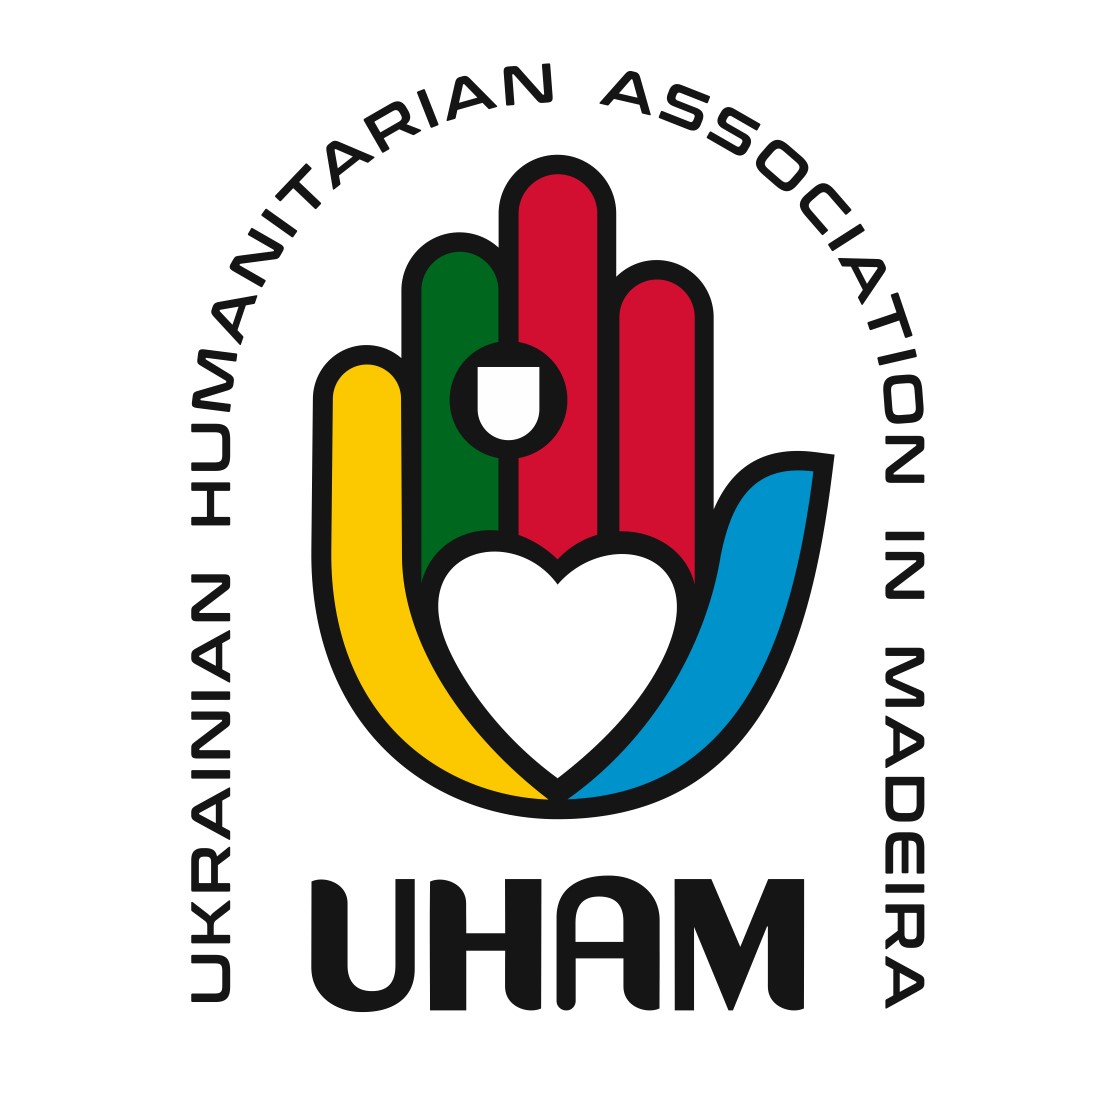 UHAM logo design by logo designer Kovalen.com for your inspiration and for the worlds largest logo competition